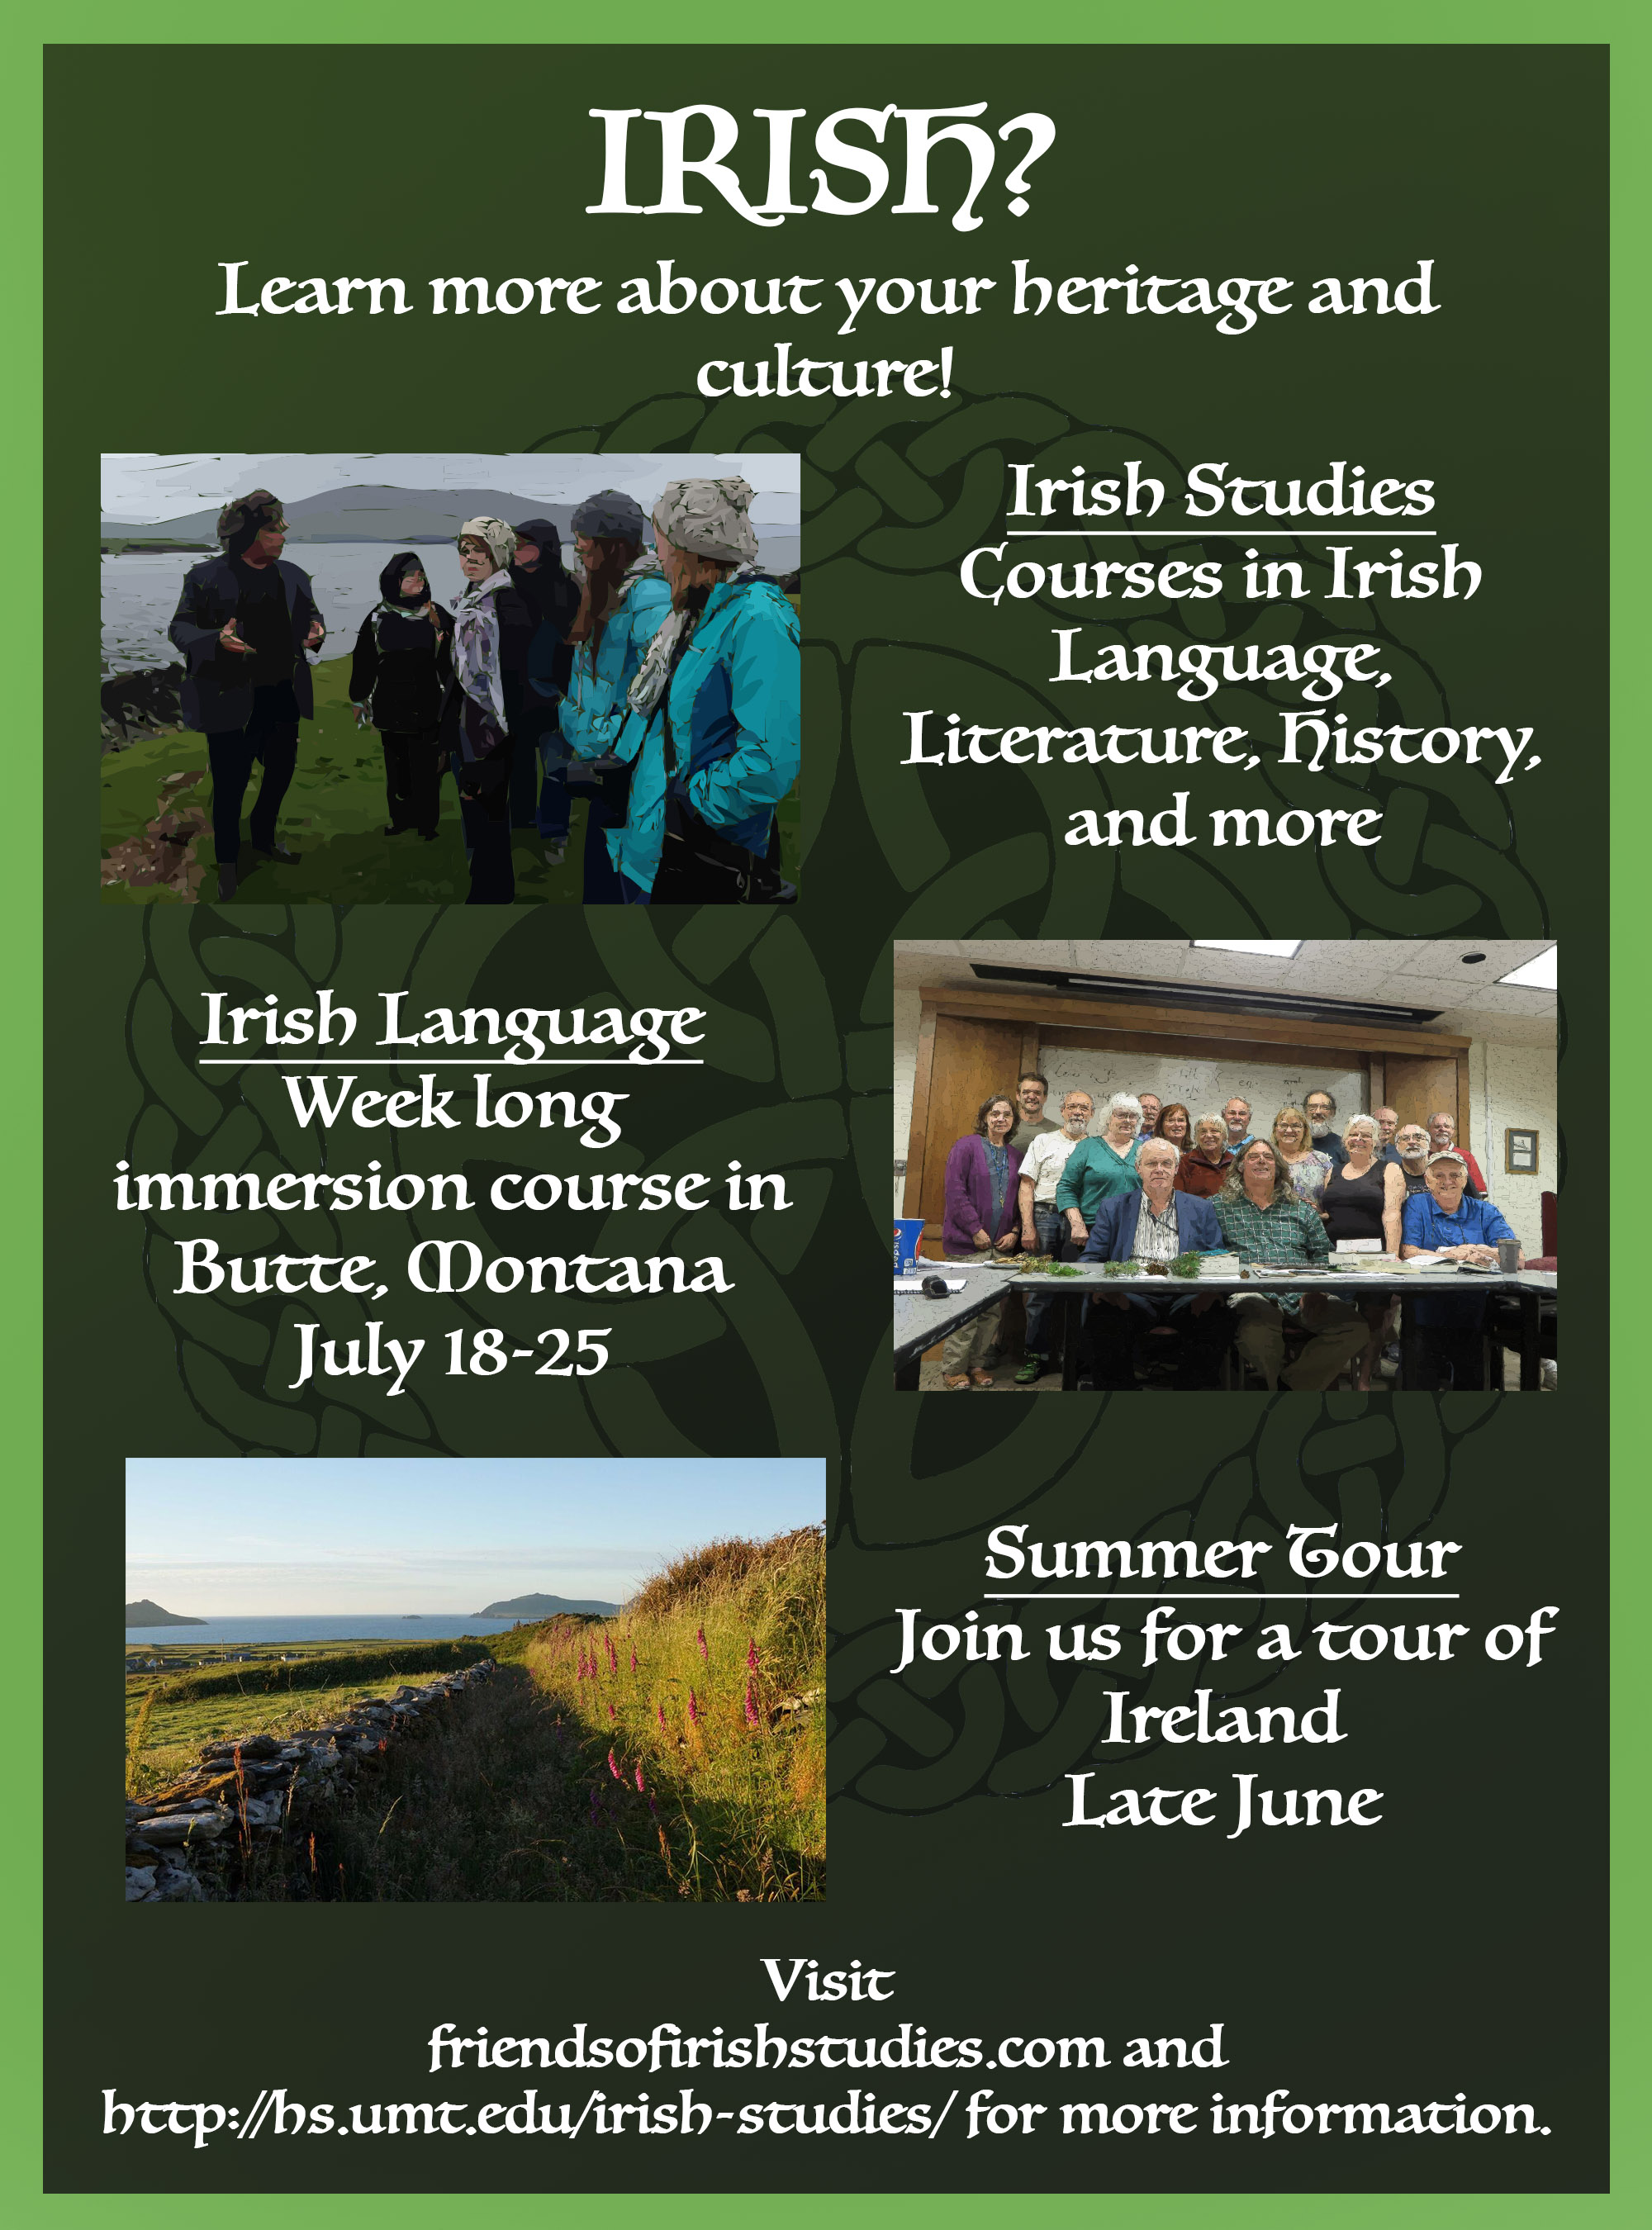 Friends of Irish Studies in the West offer 2020 Irish studies programs and travel to Ireland